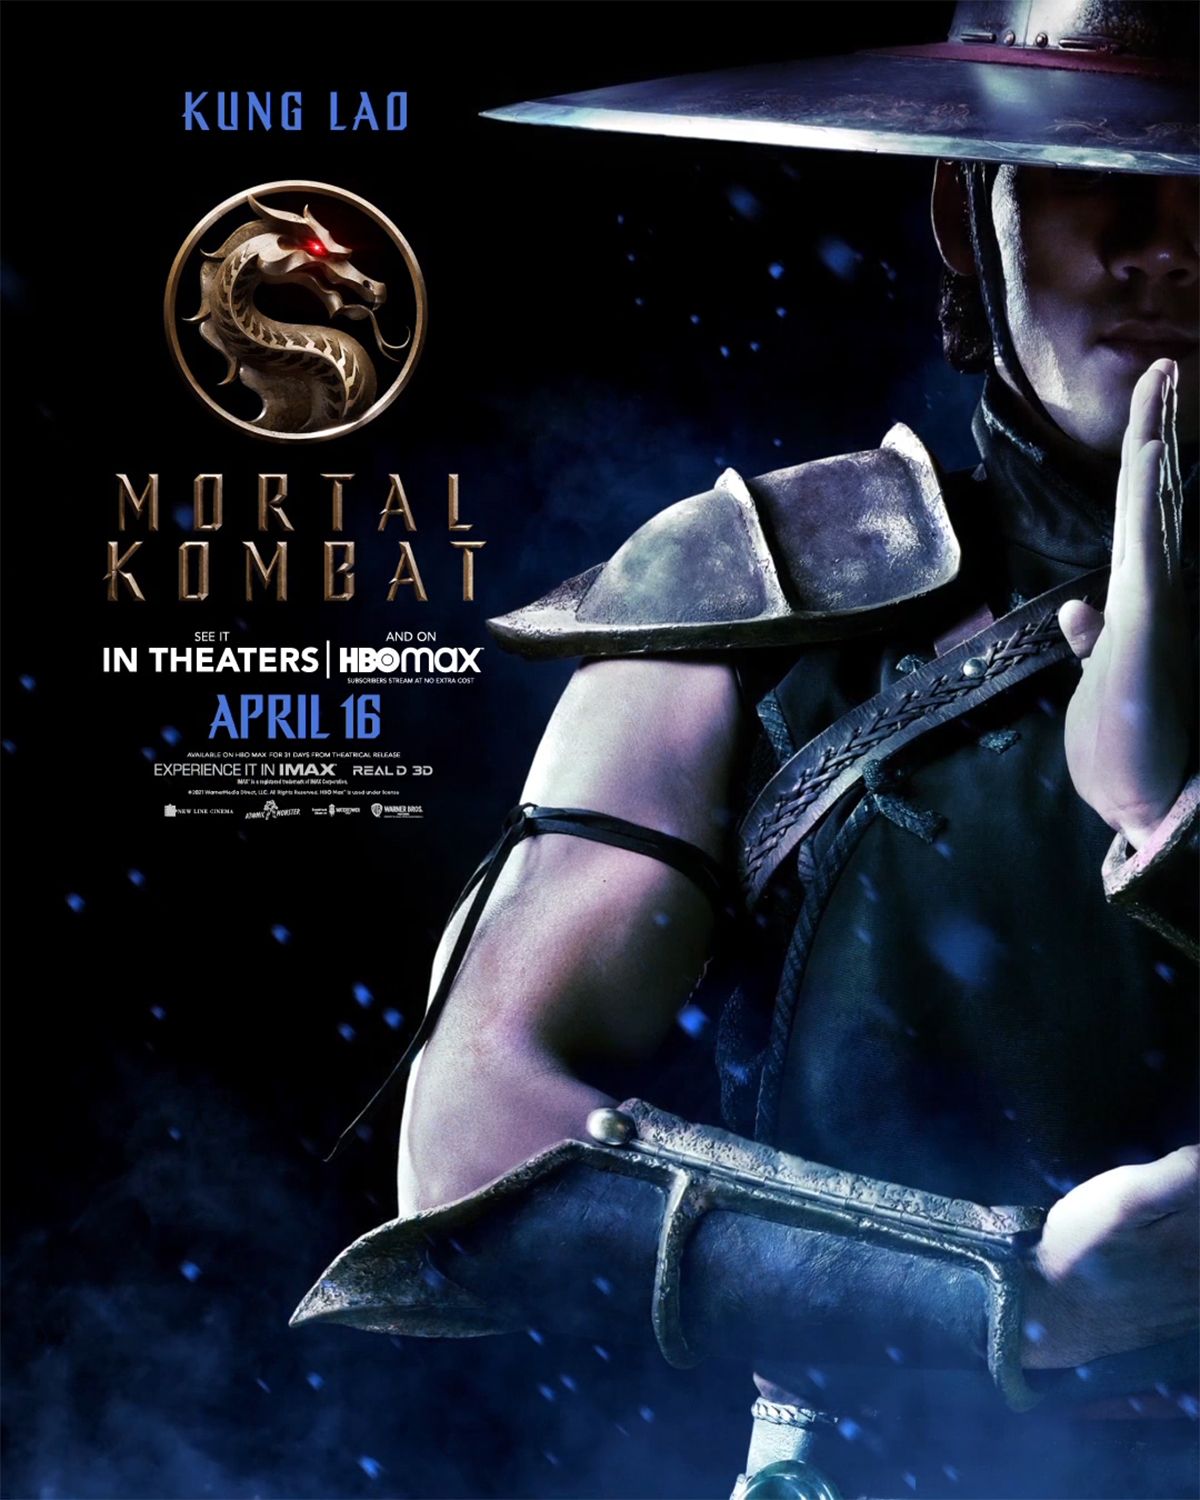 Kung Lao character poster for Mortal Kombat movie